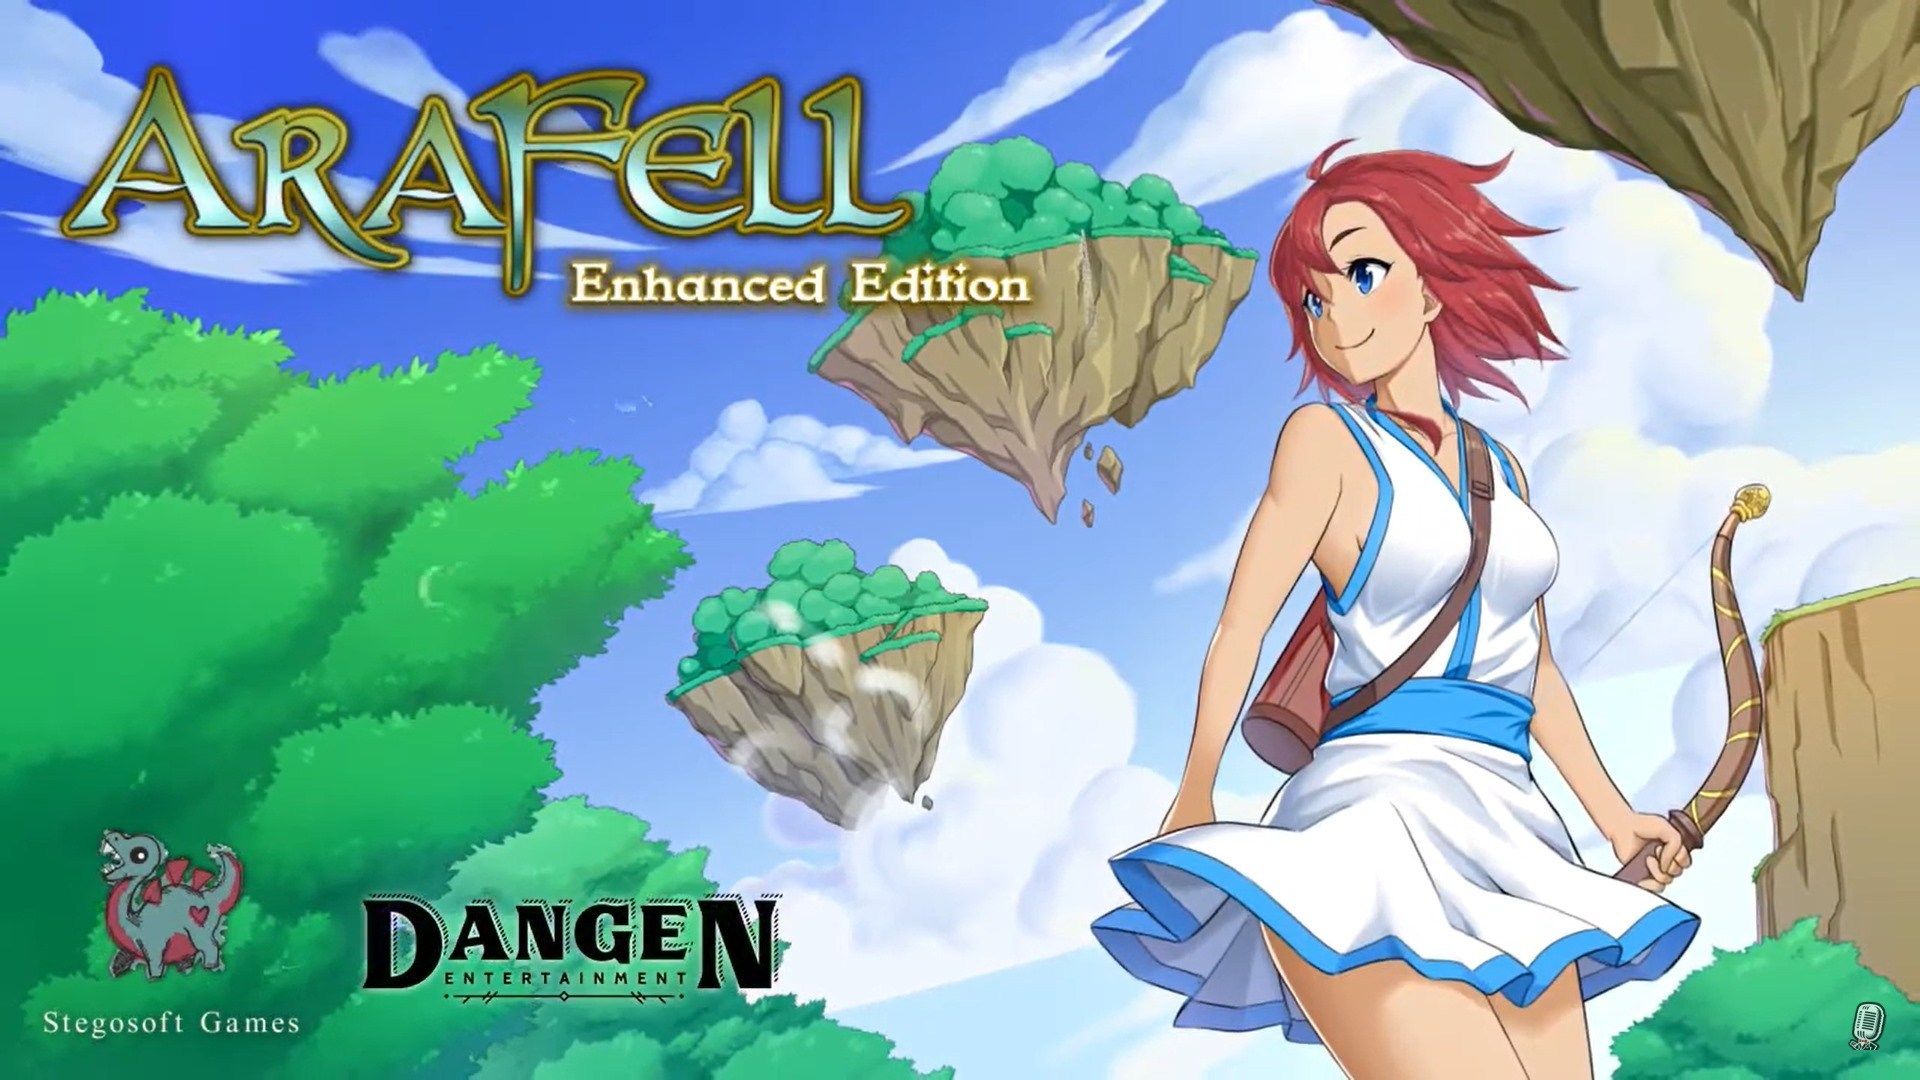 16 Bit RPG Ara Fell: Enhanced Edition Announced For PS Switch